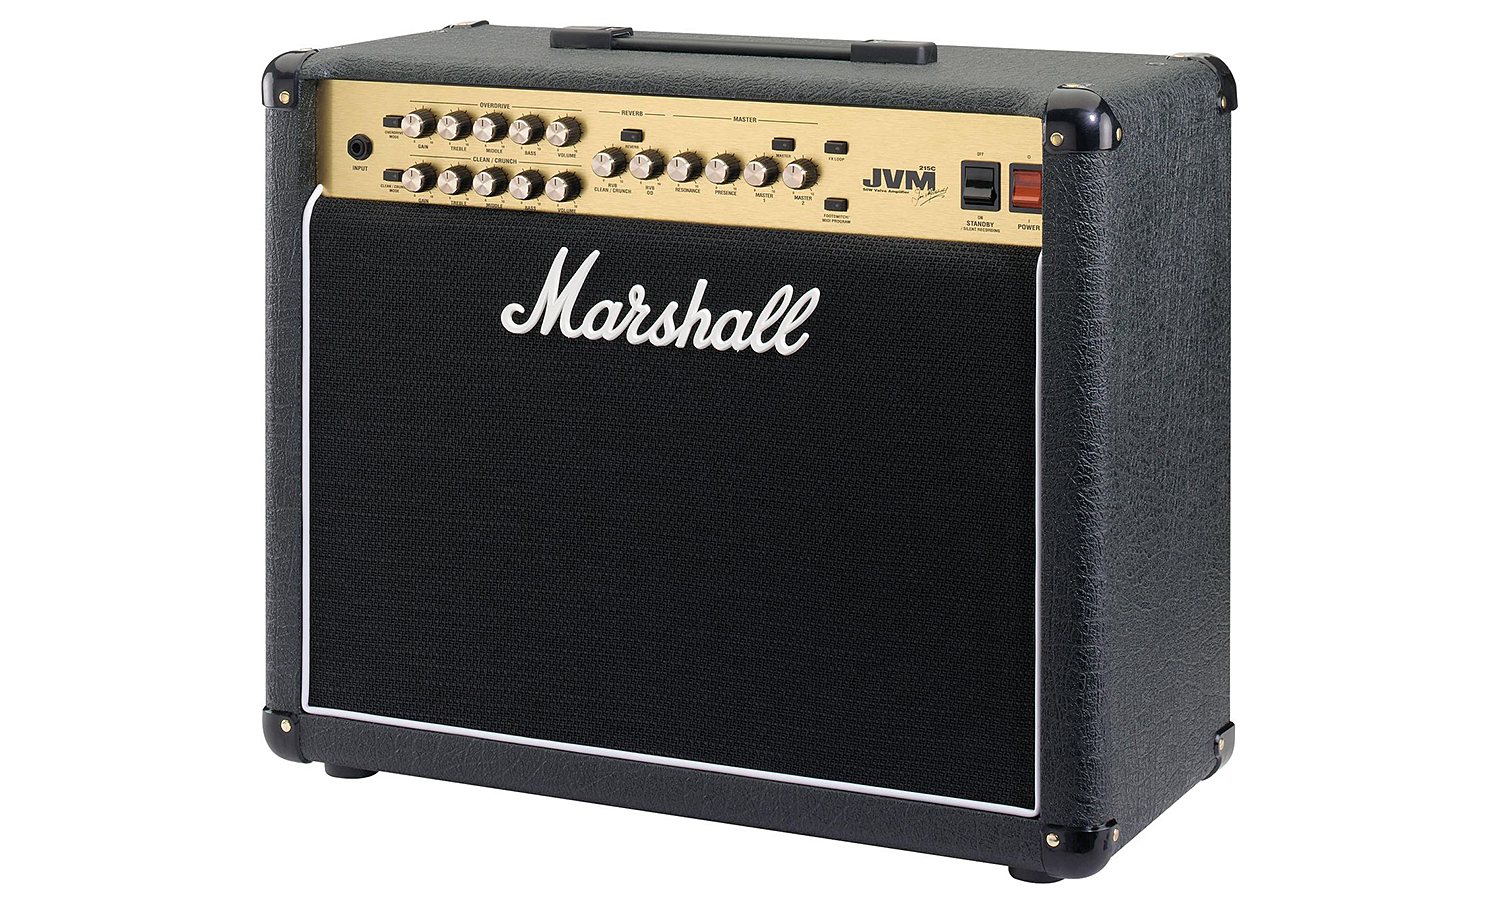 Marshall Jvm215c 50w 1x12 - Combo amplificador para guitarra eléctrica - Variation 1